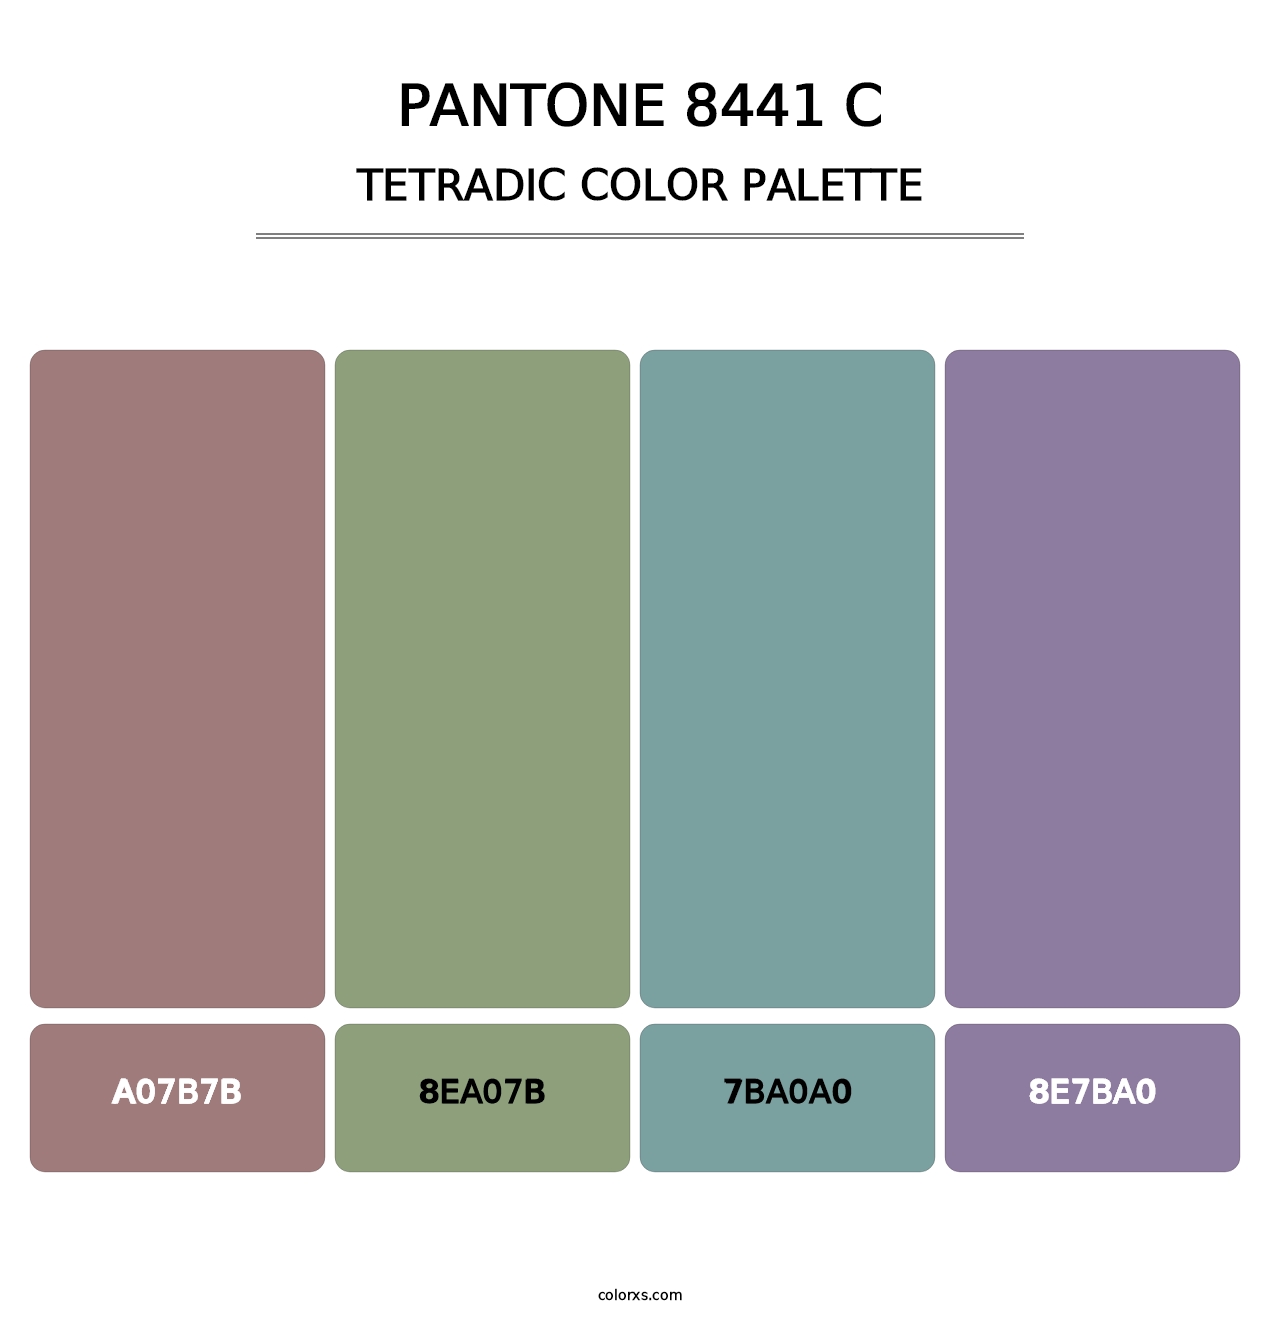 PANTONE 8441 C - Tetradic Color Palette